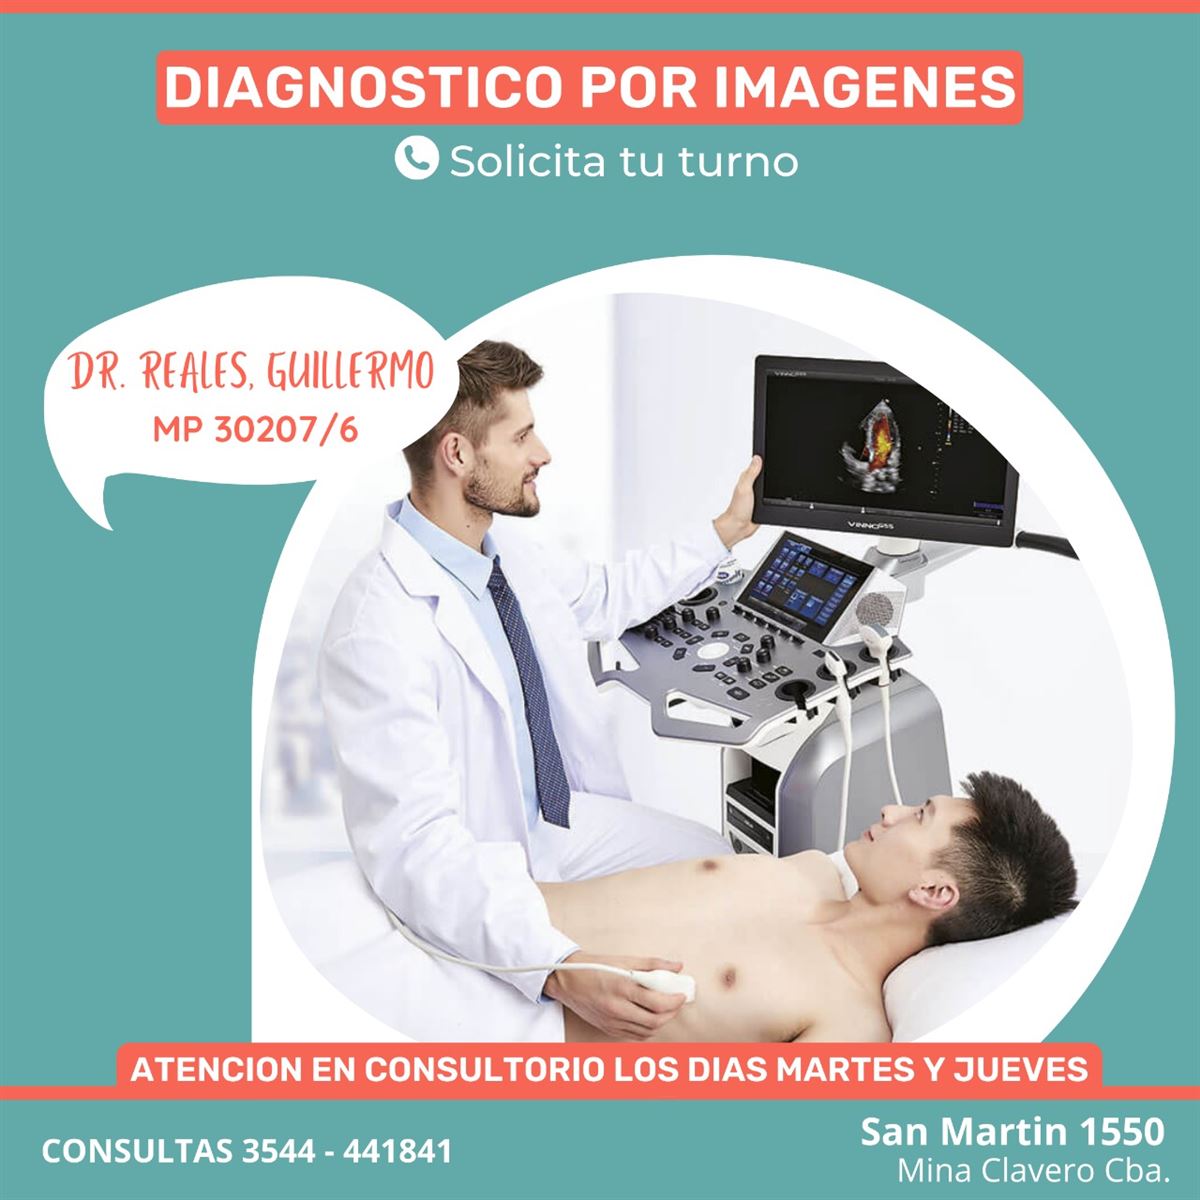 Diagnóstico por Imágenes - InfoGuia Traslasierra - Diagnóstico por Imágenes